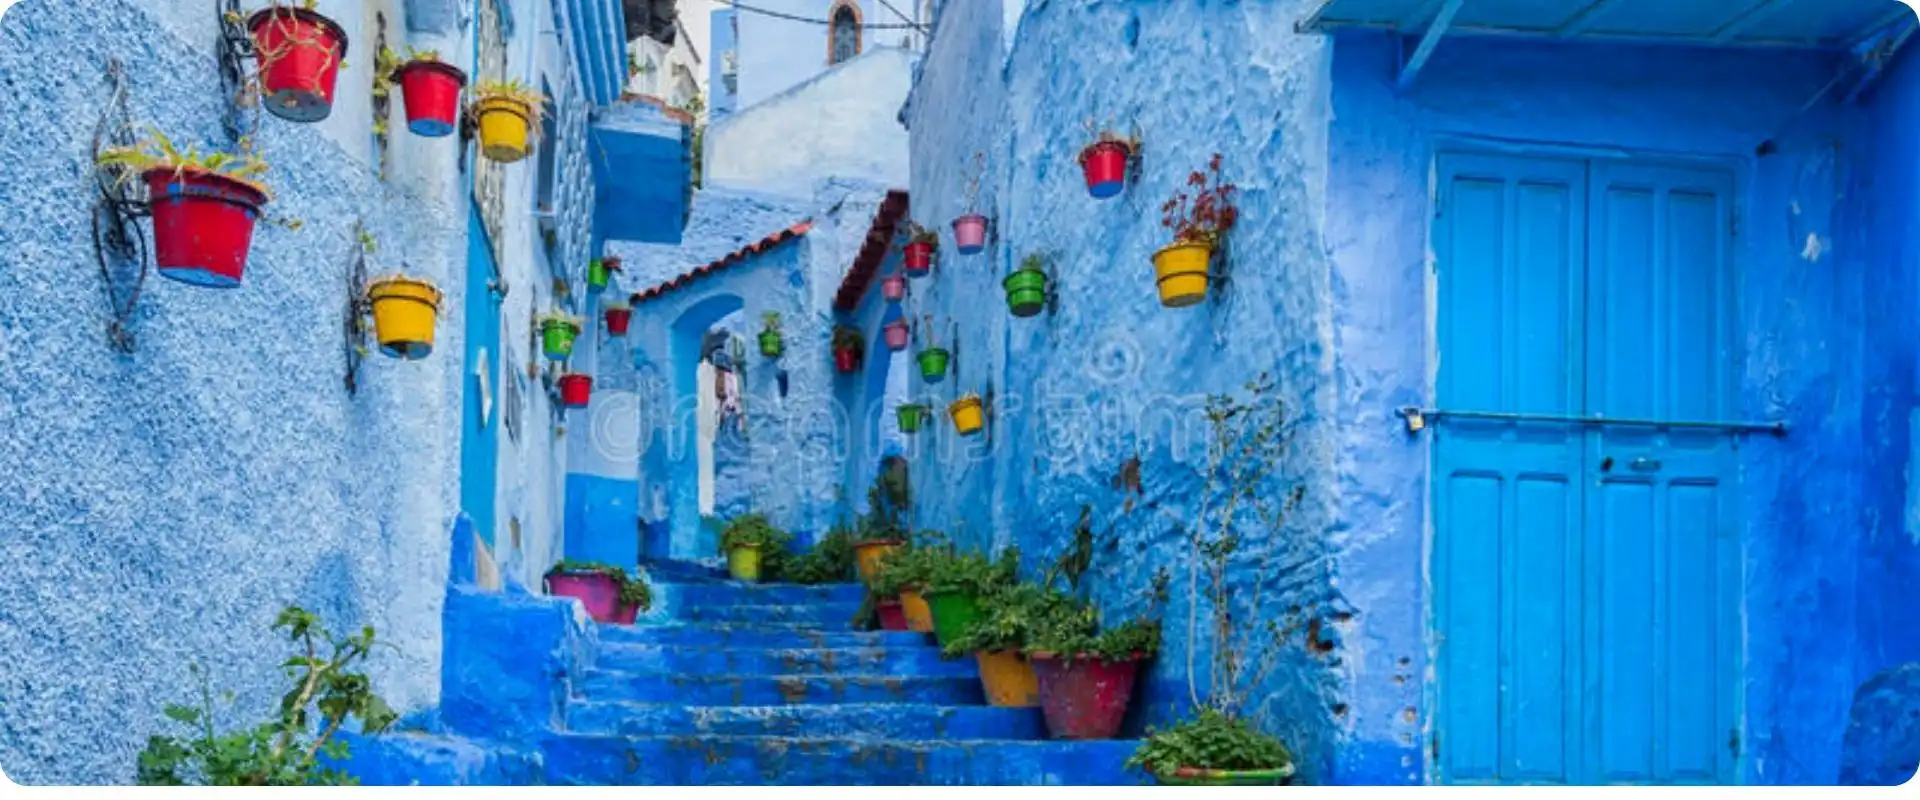 blå gade i marrakech marokko charterrejse fra hamborg.webp